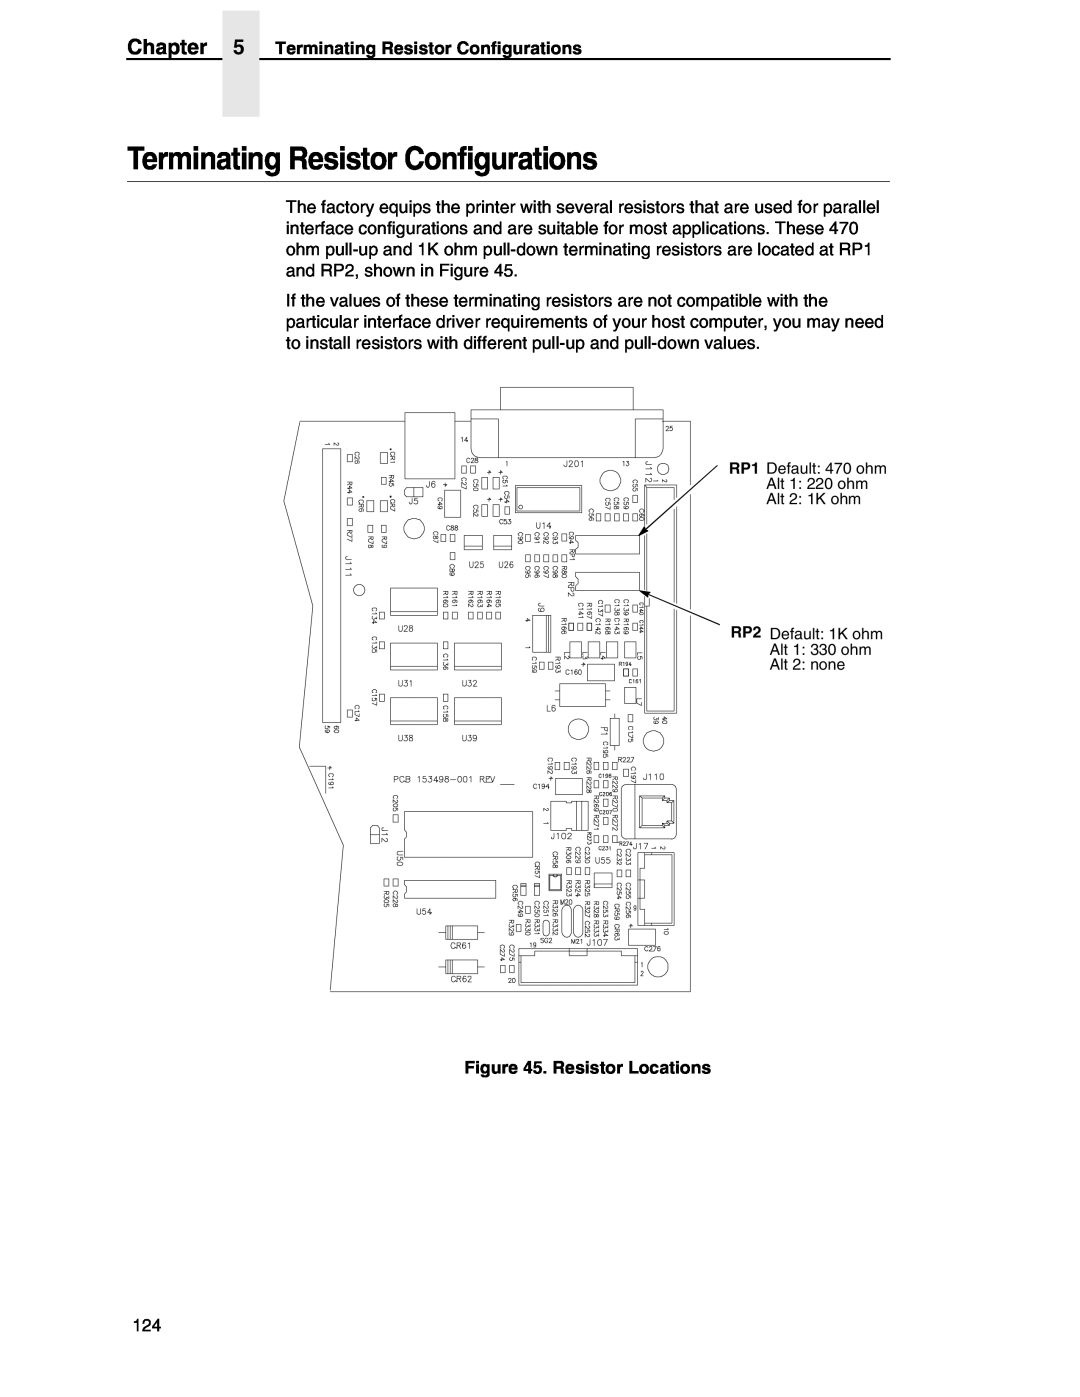 Compaq P5000 Series setup guide Terminating Resistor Configurations, Resistor Locations 